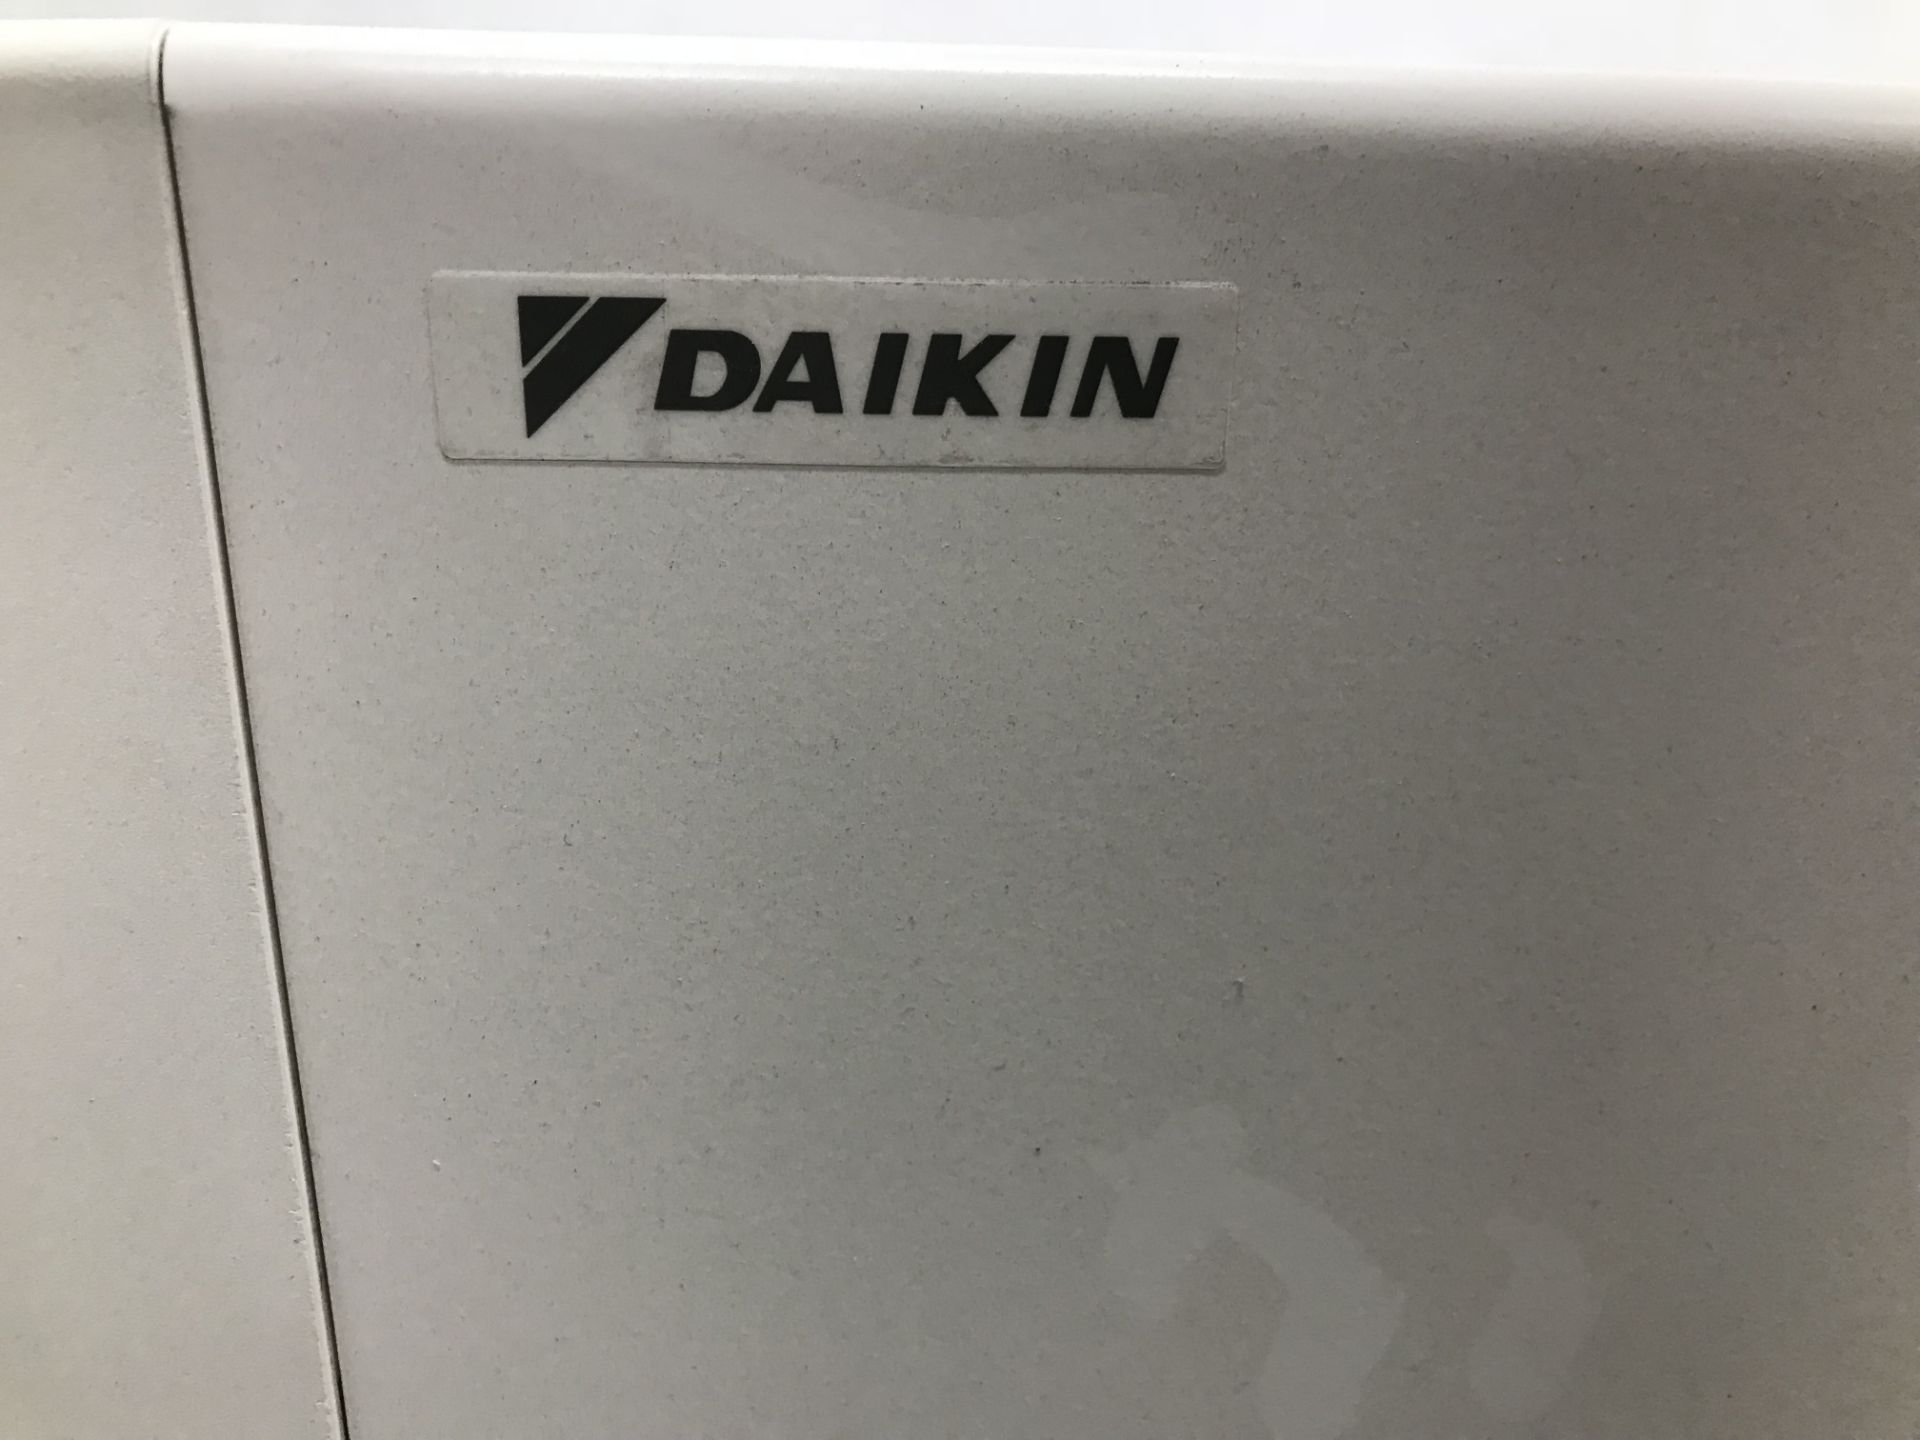 Daikin FXLQ20P2VEB VRV System Air Conditioning Unit - Image 2 of 6